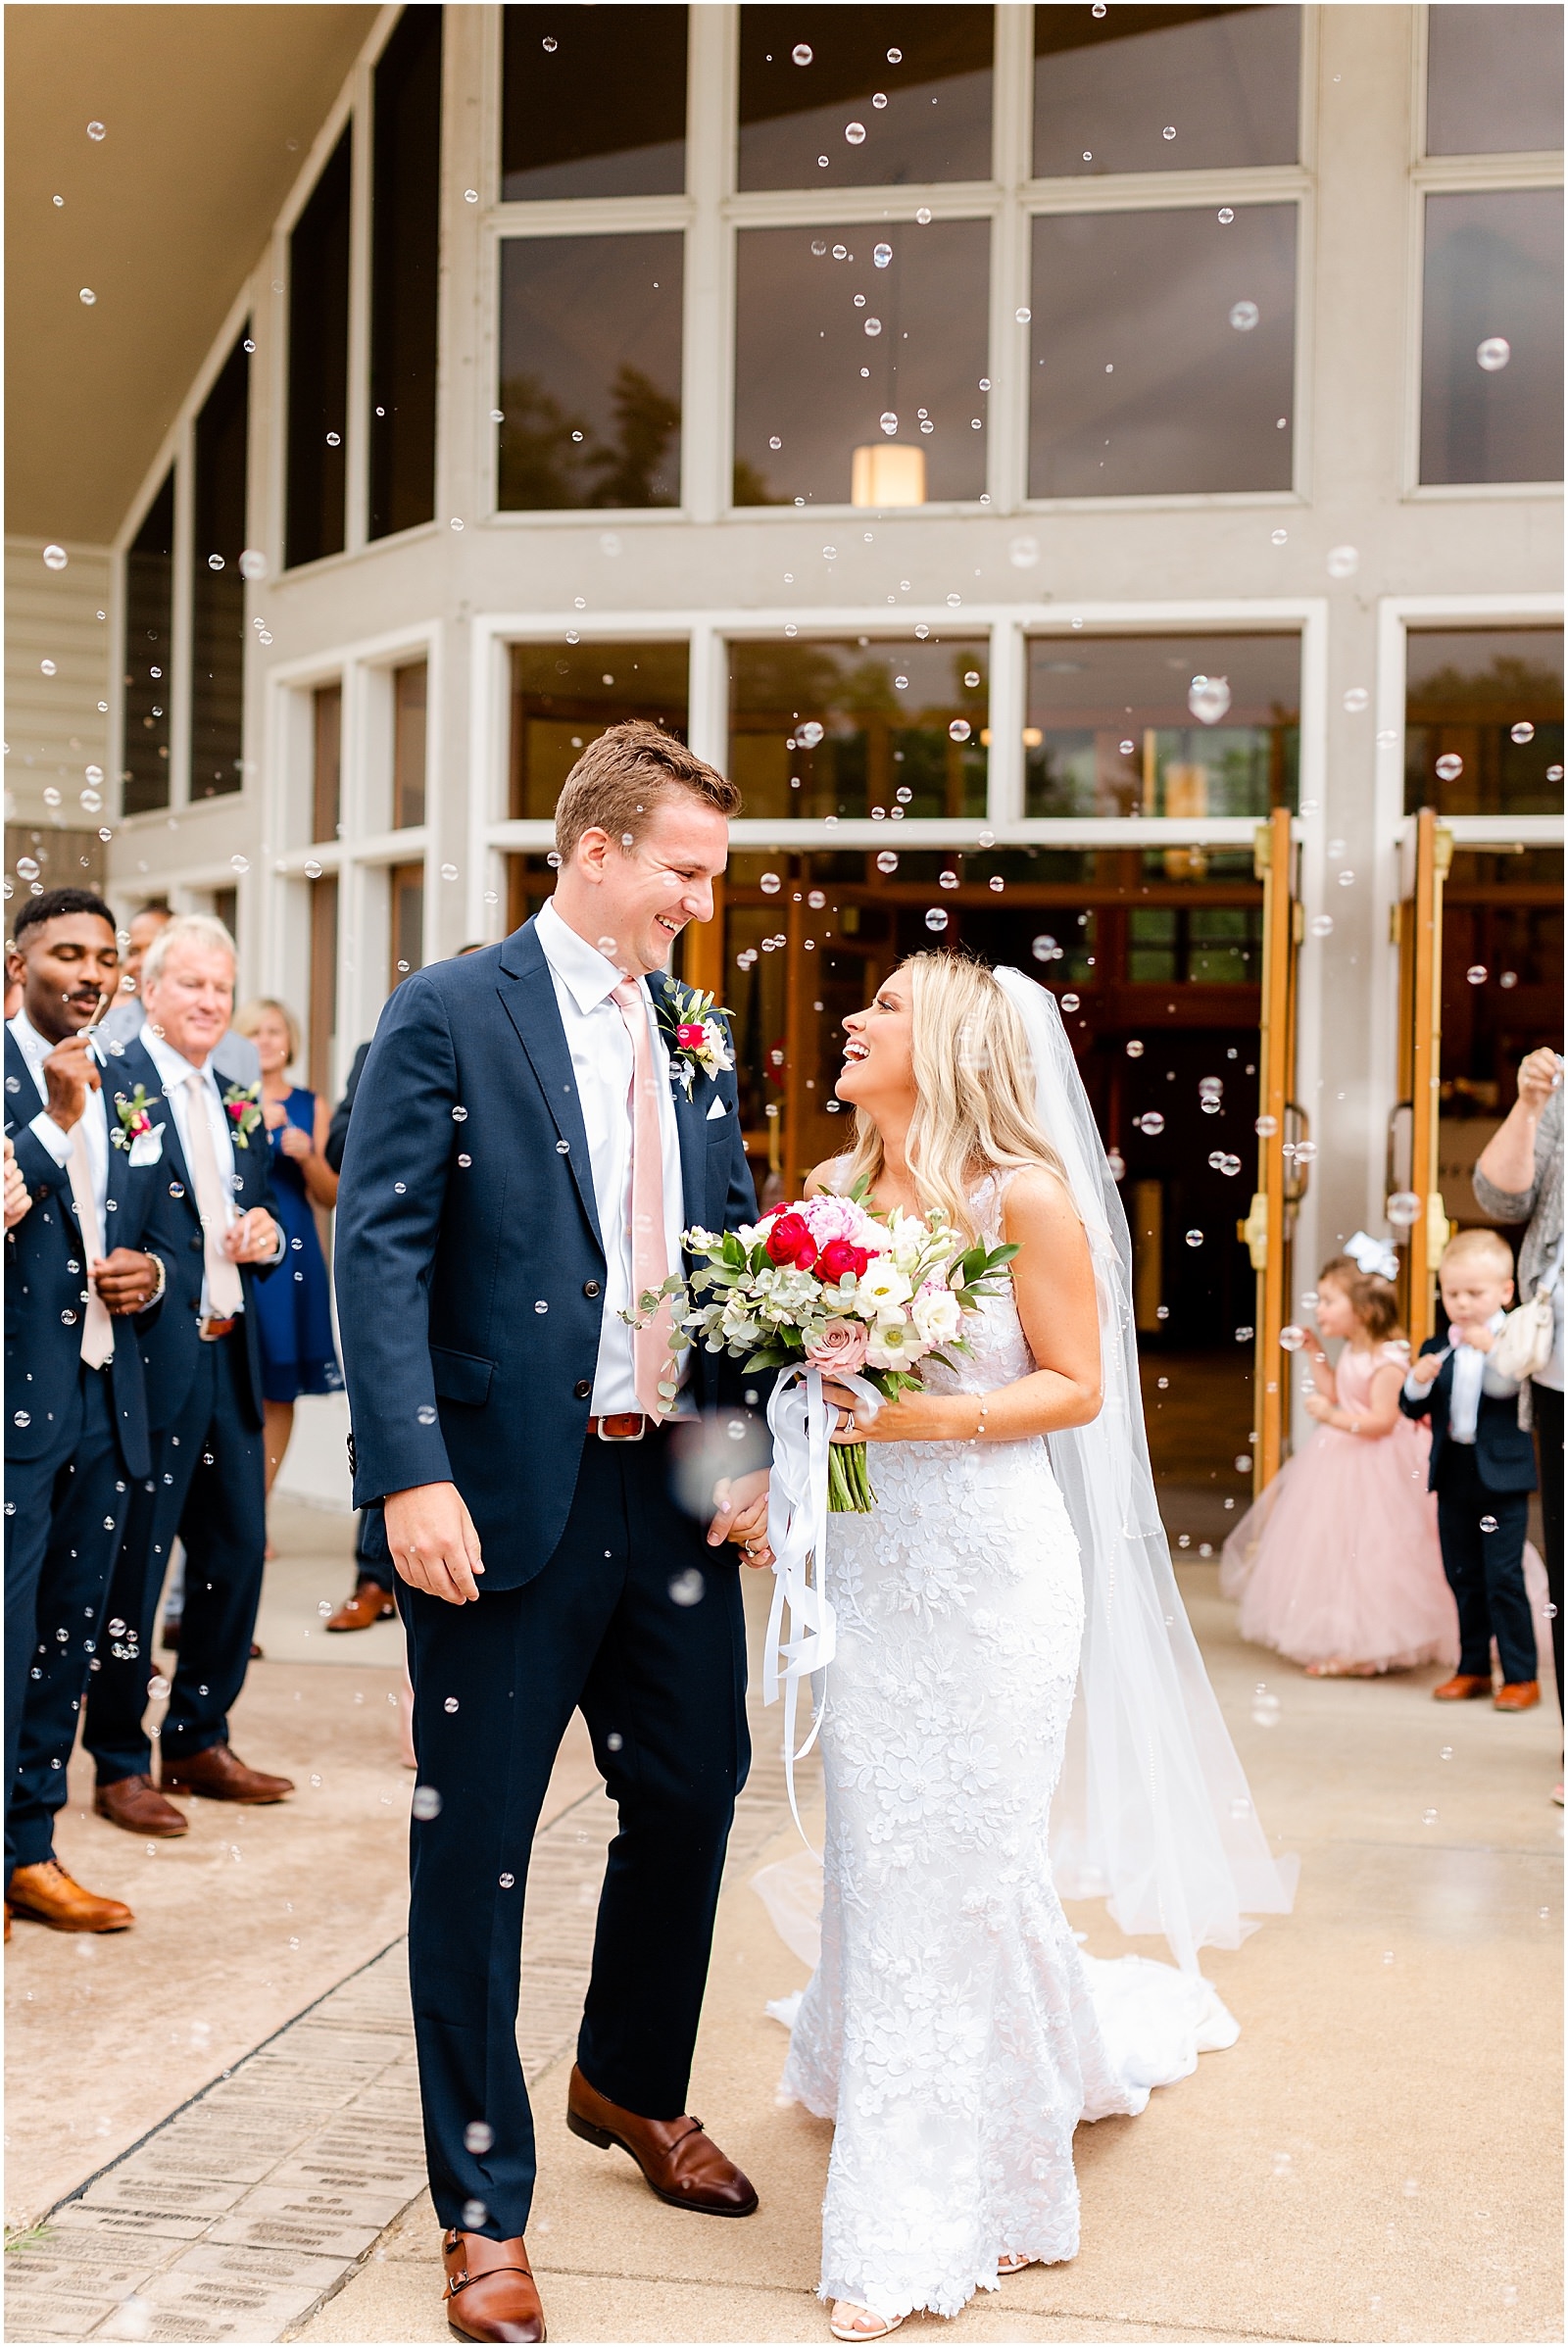 An Evansville Country Club Wedding | Madison and Christiaan | Bret and Brandie | Evansville Photographers | @bretandbrandie-0136.jpg